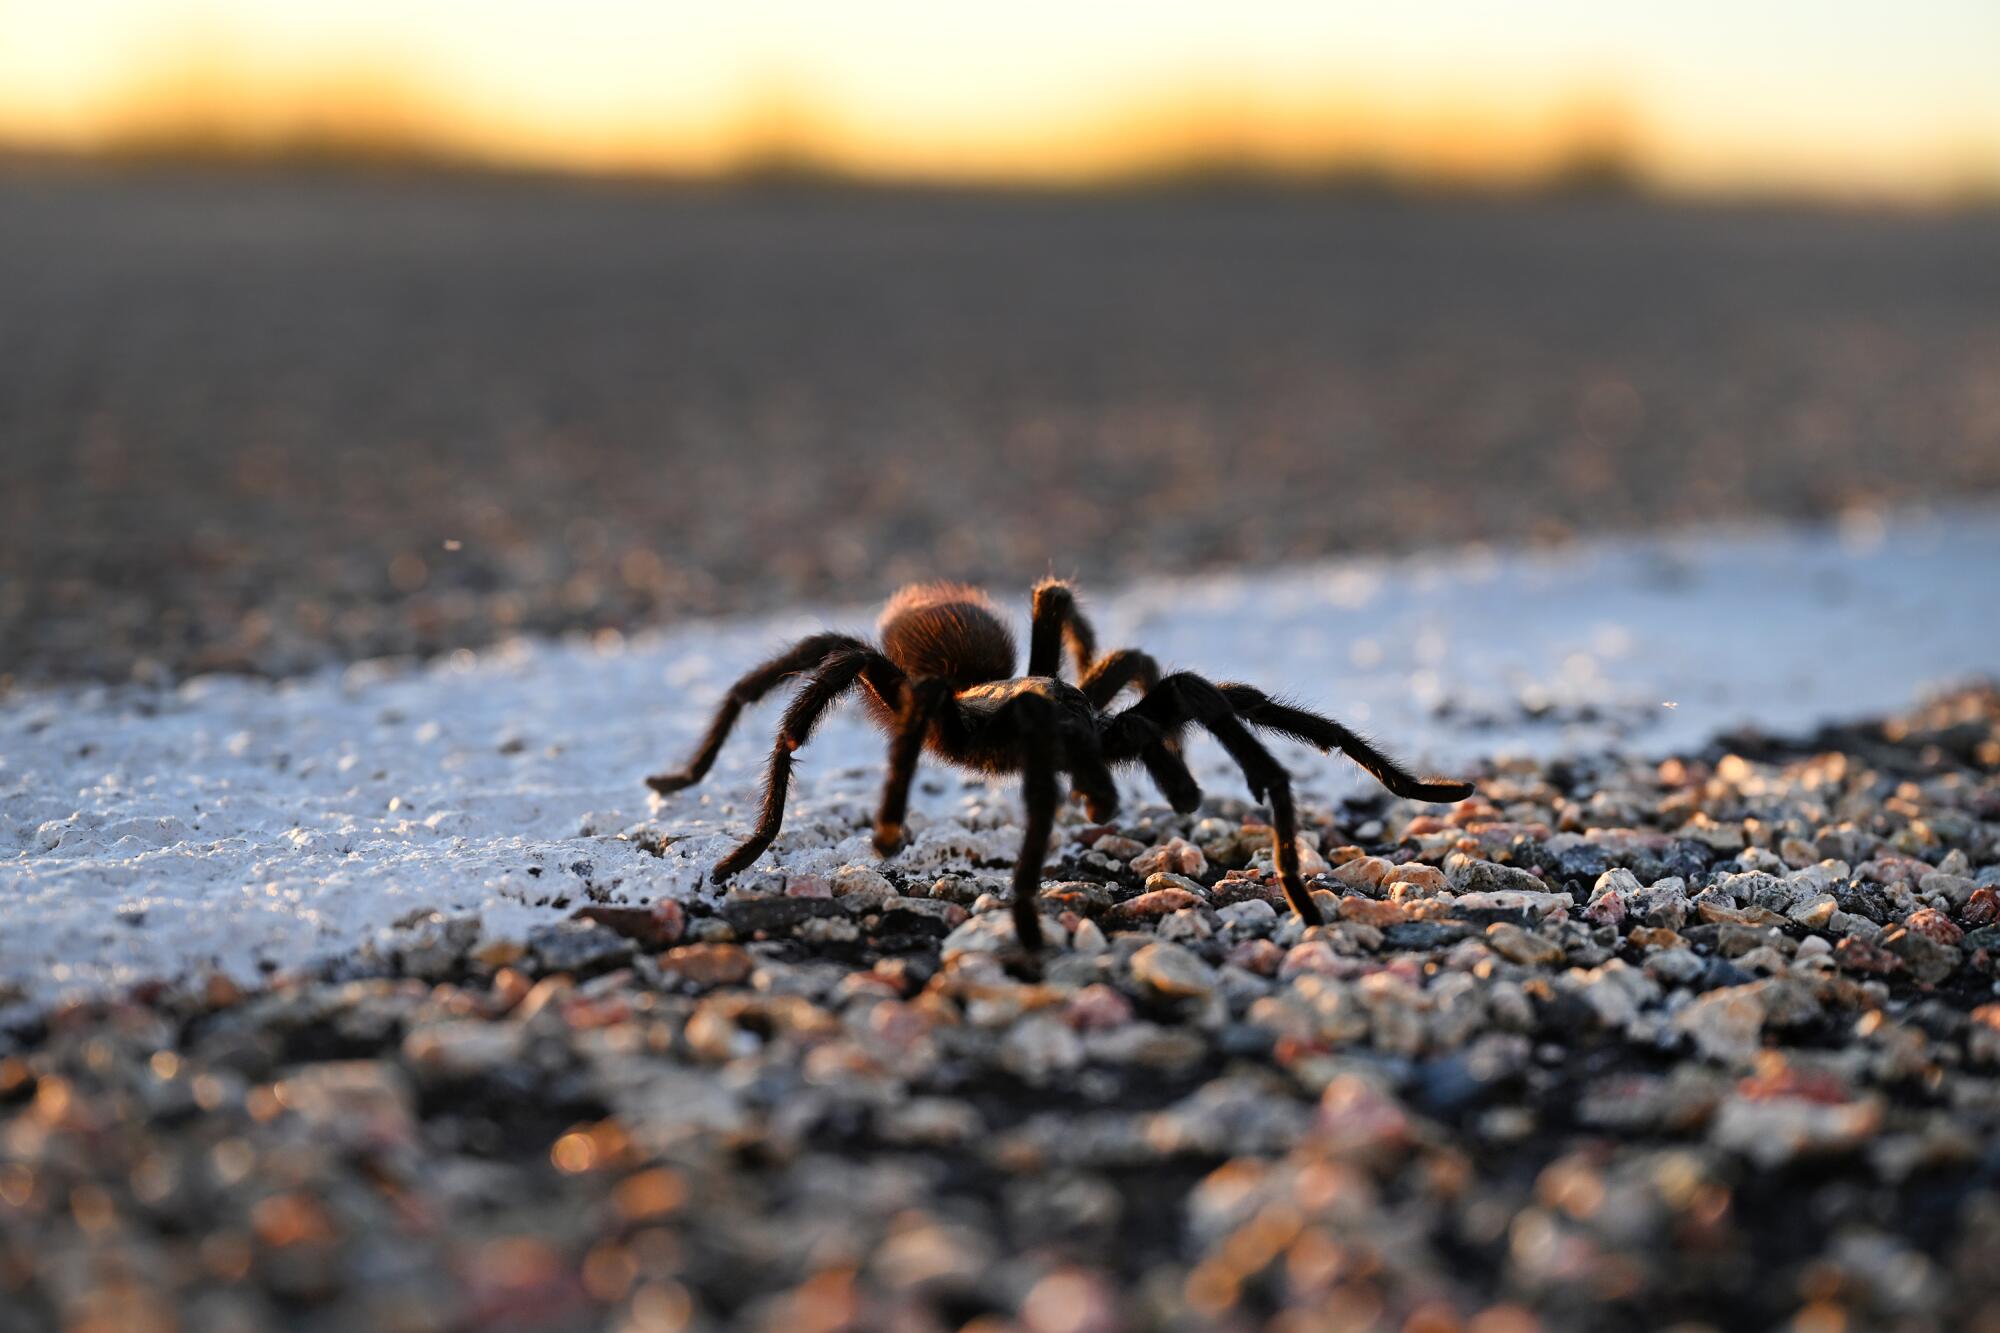 A male tarantula crosses Colorado Highway 71